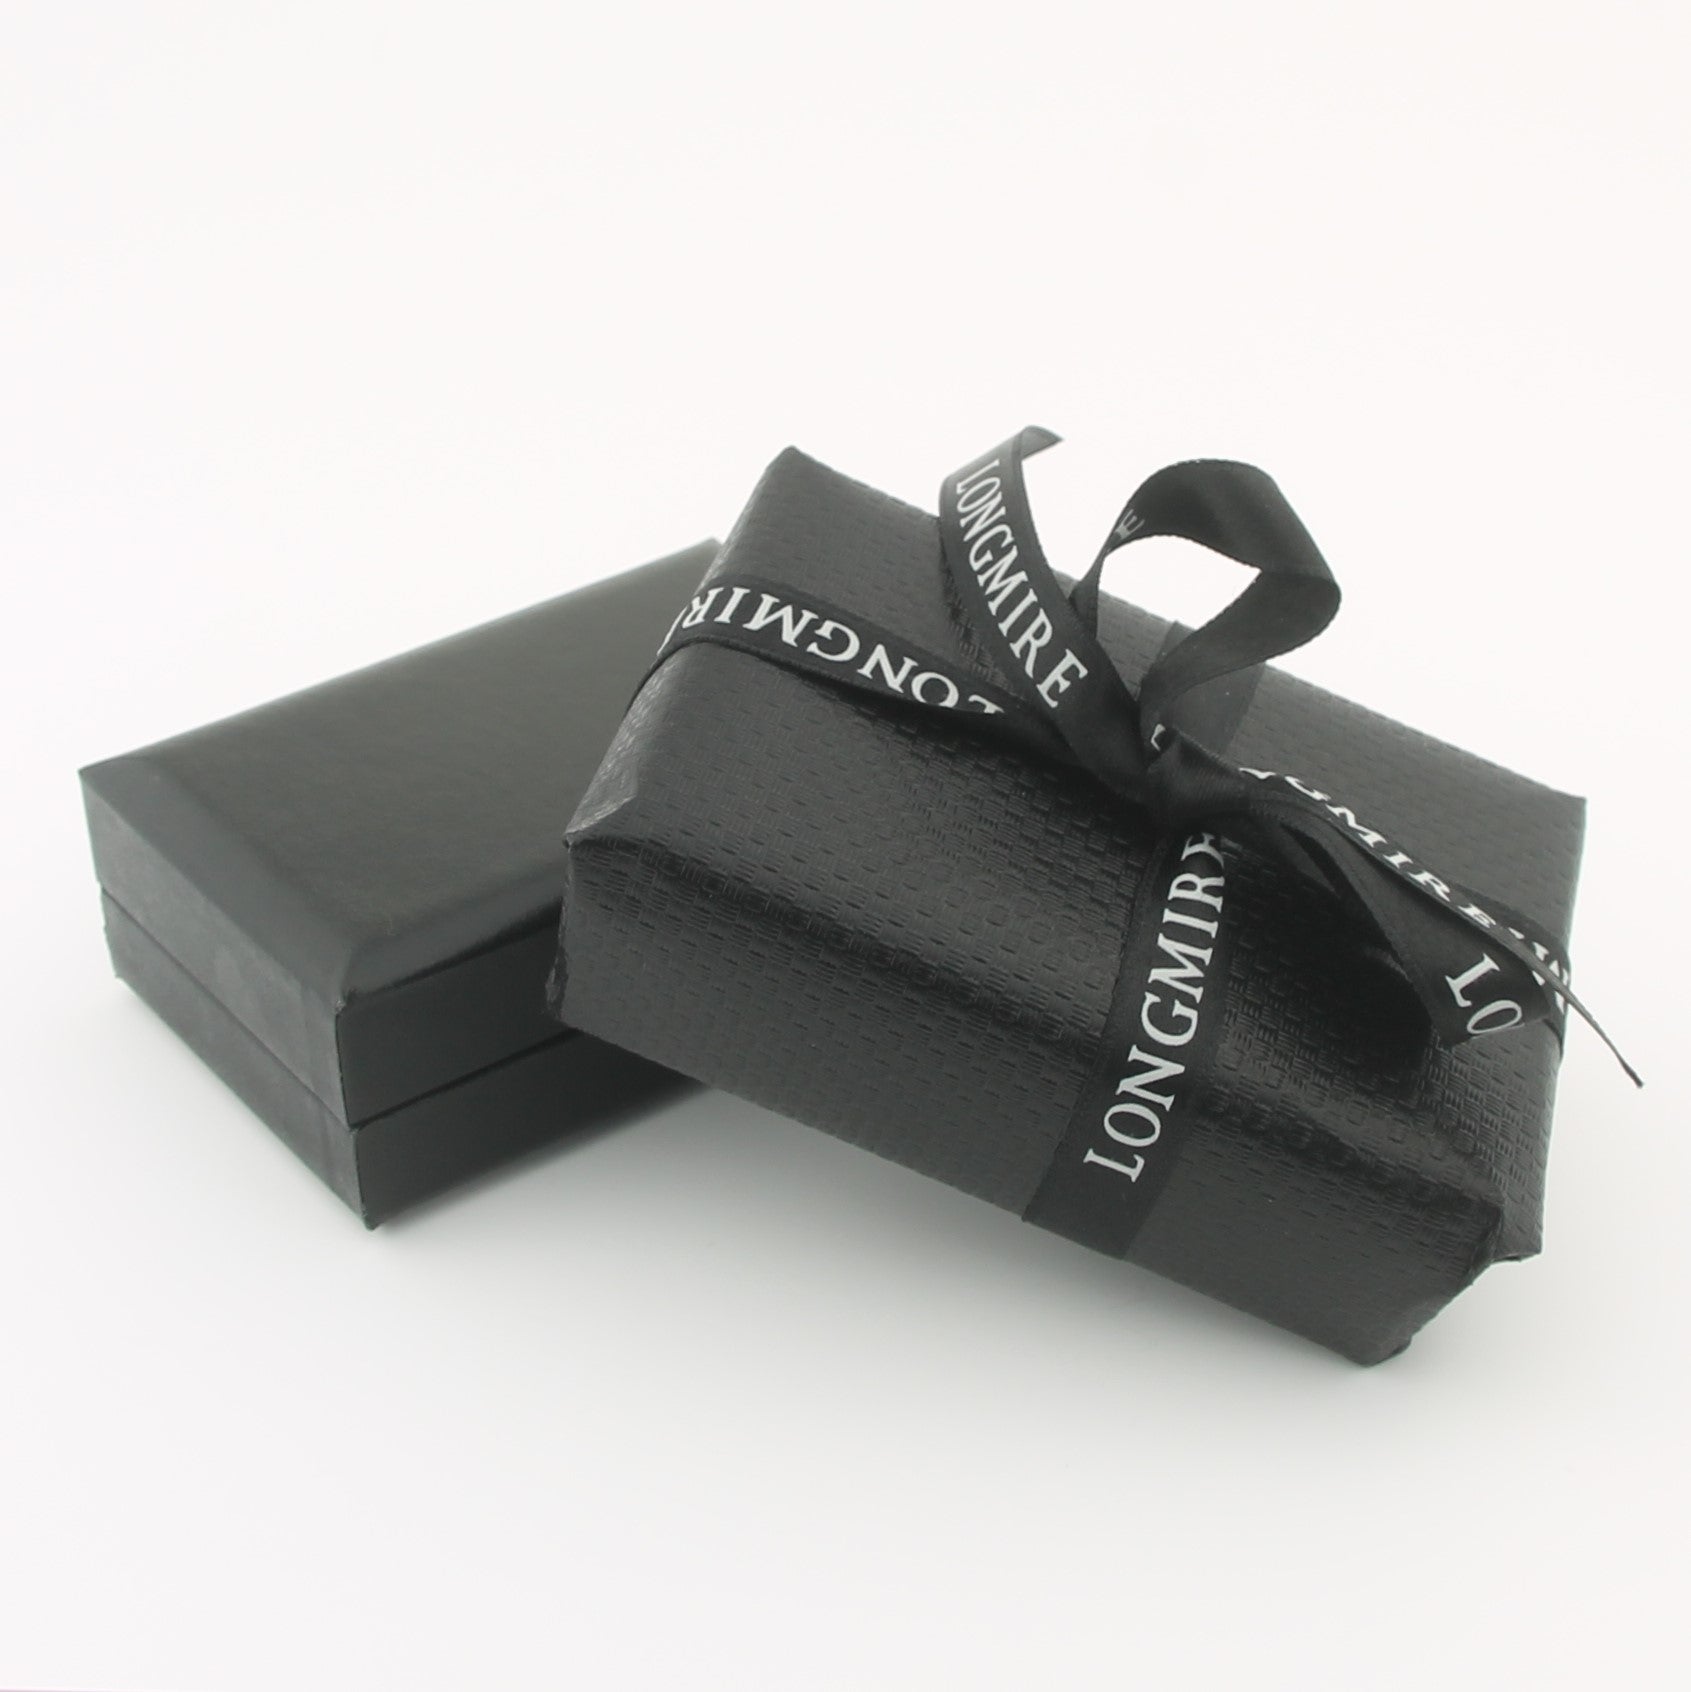 longmire wrapped gift box